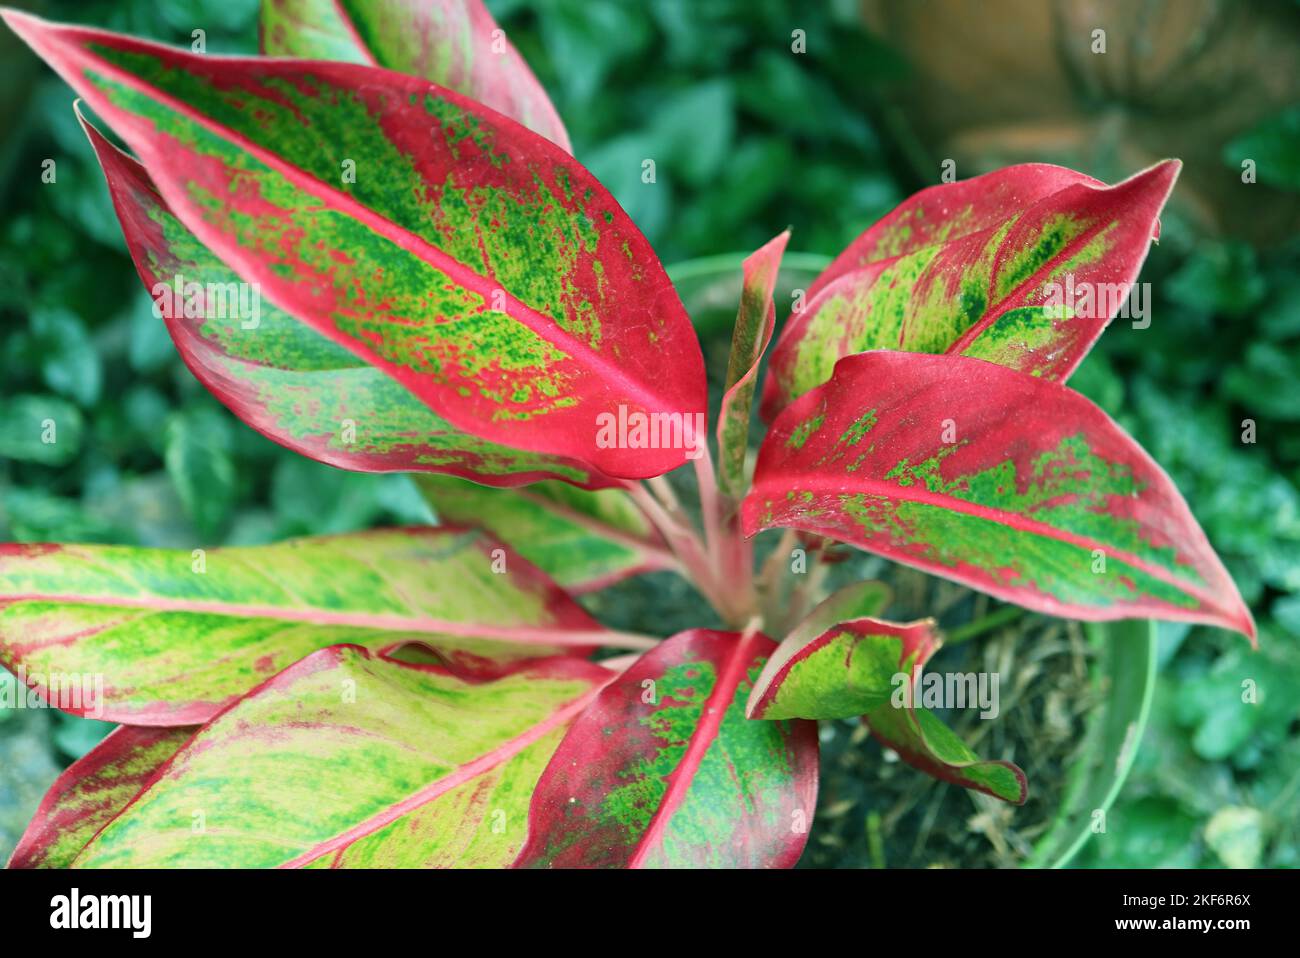 Closeup of Potted Red Aglaonema or Aglaonema Siam Aurora Plant in the Garden Stock Photo